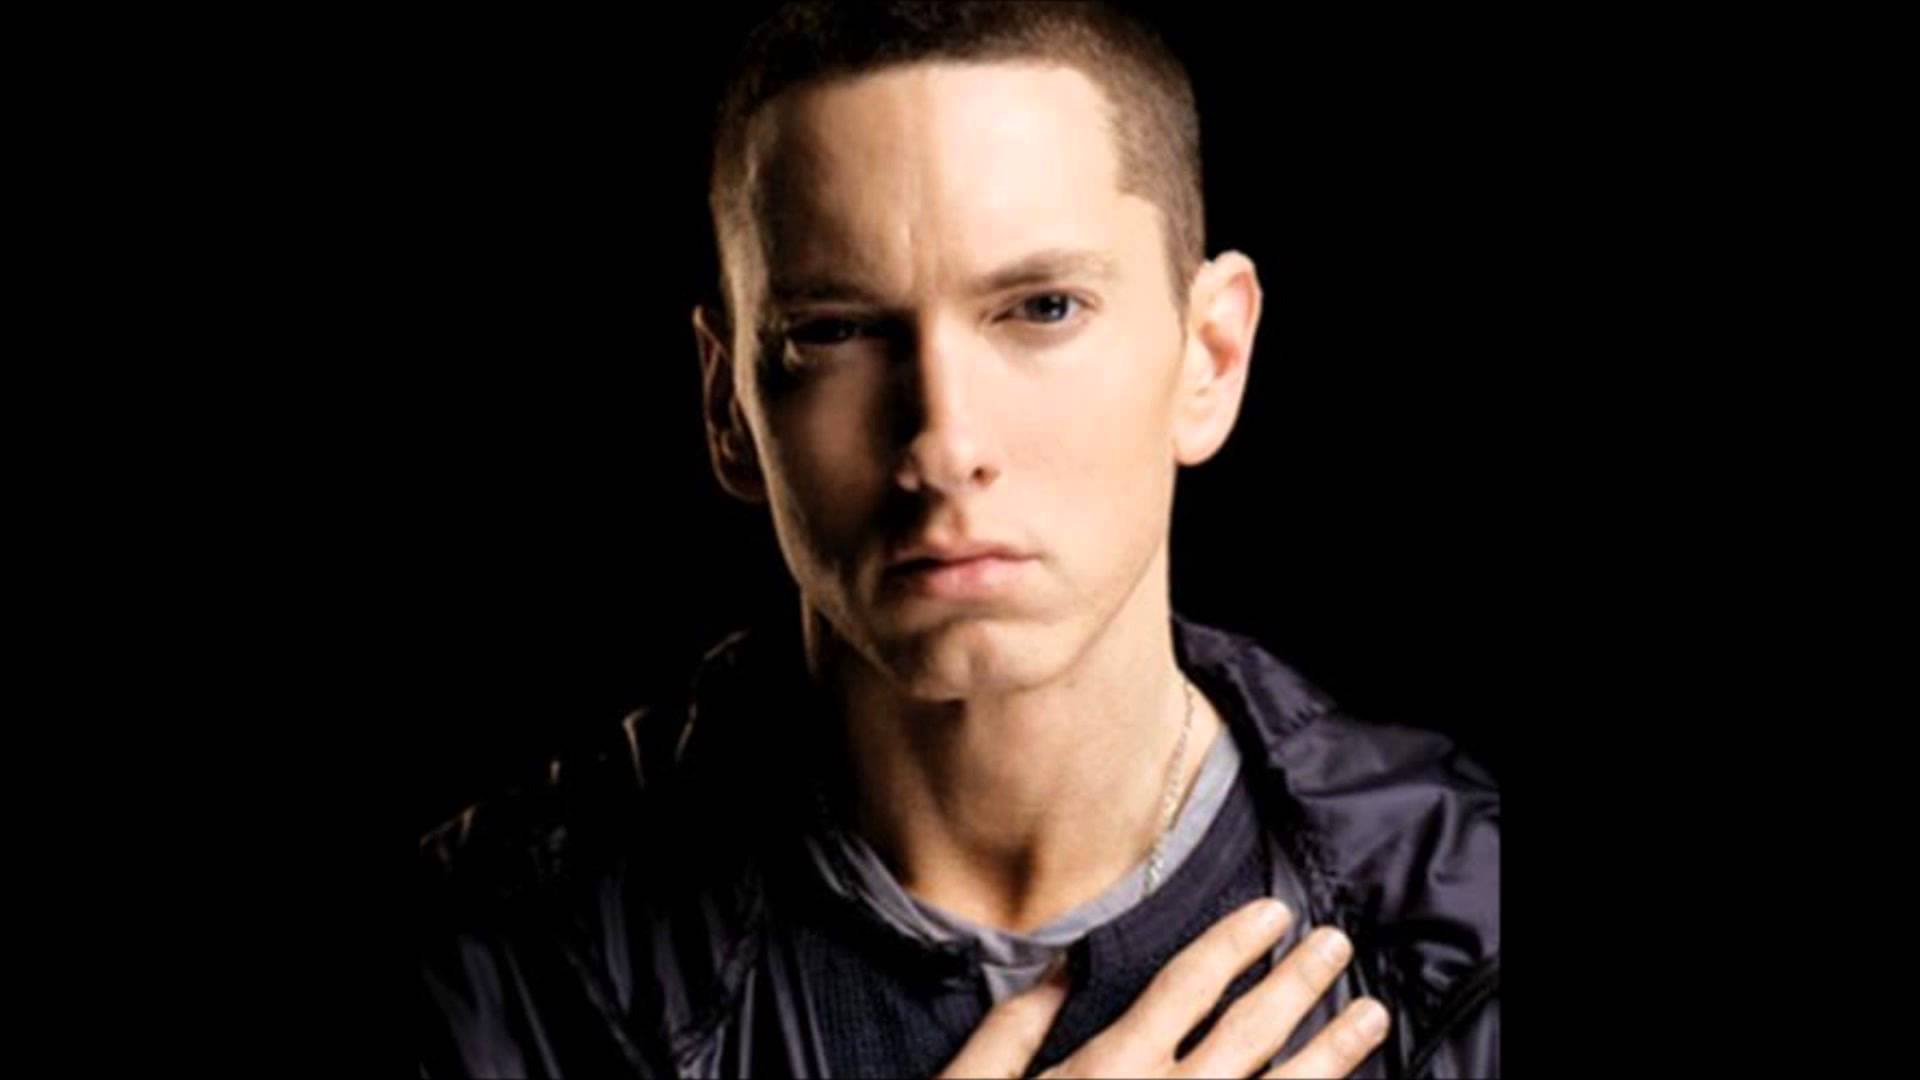 Eminem reinventa el sencillo "Chloraseptic" junto a 2 Chainz y Phresher. Cusica Plus.